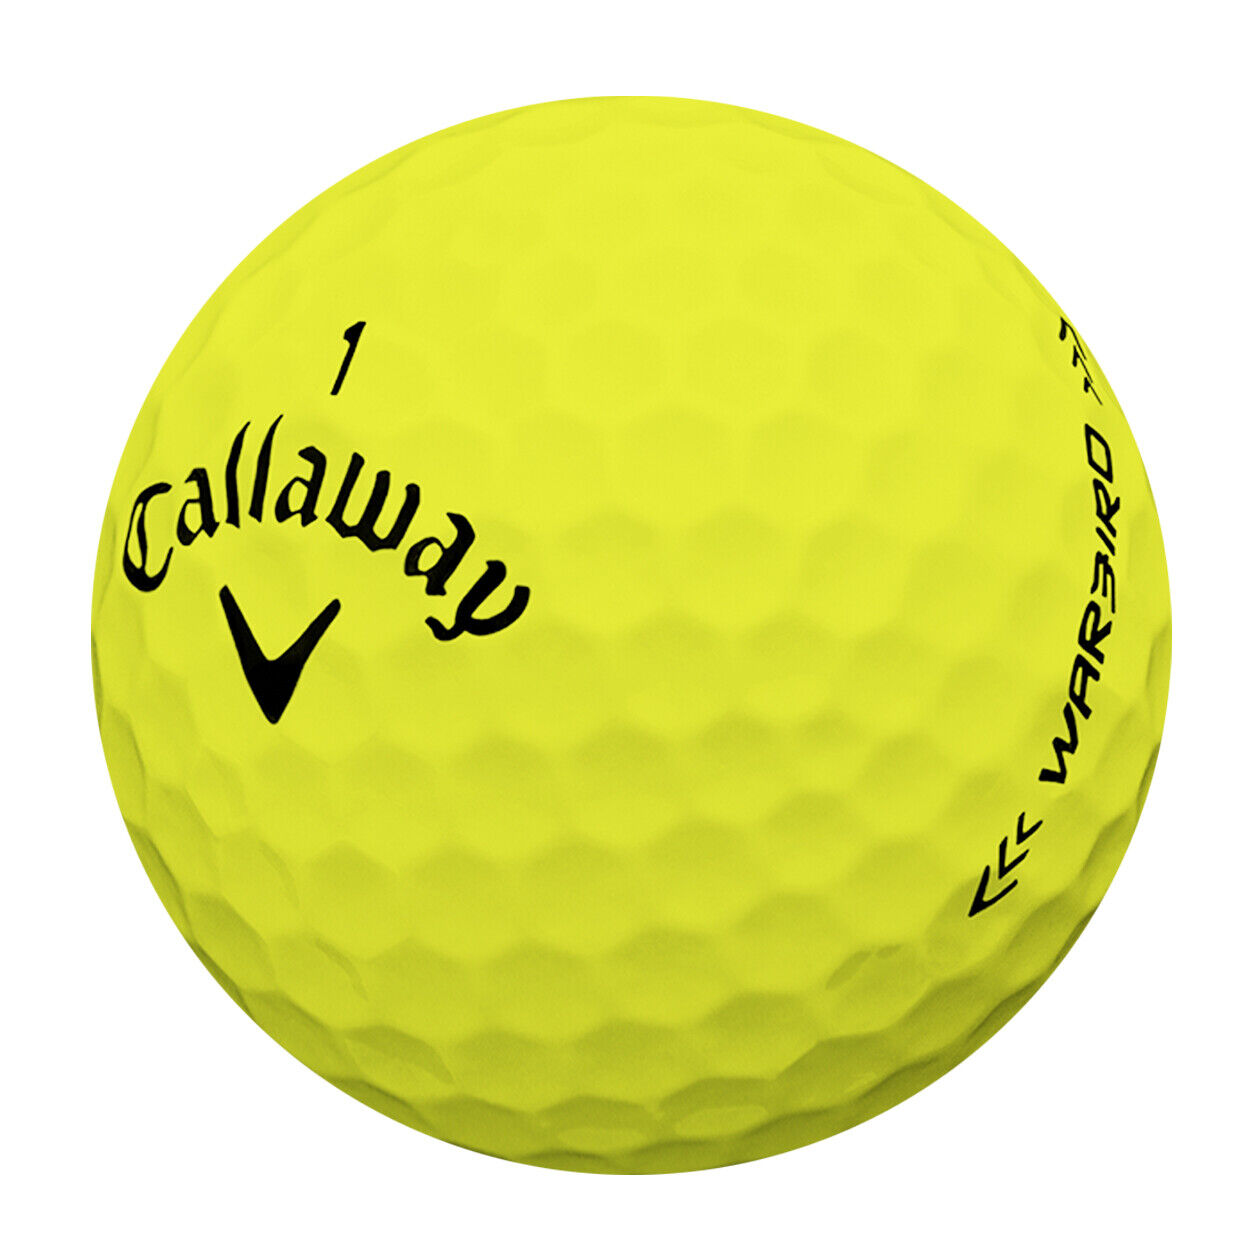 Callaway Warbird Bulk Golf Balls 24 (2 Dozen) Optic Yellow - New in Bulk Package